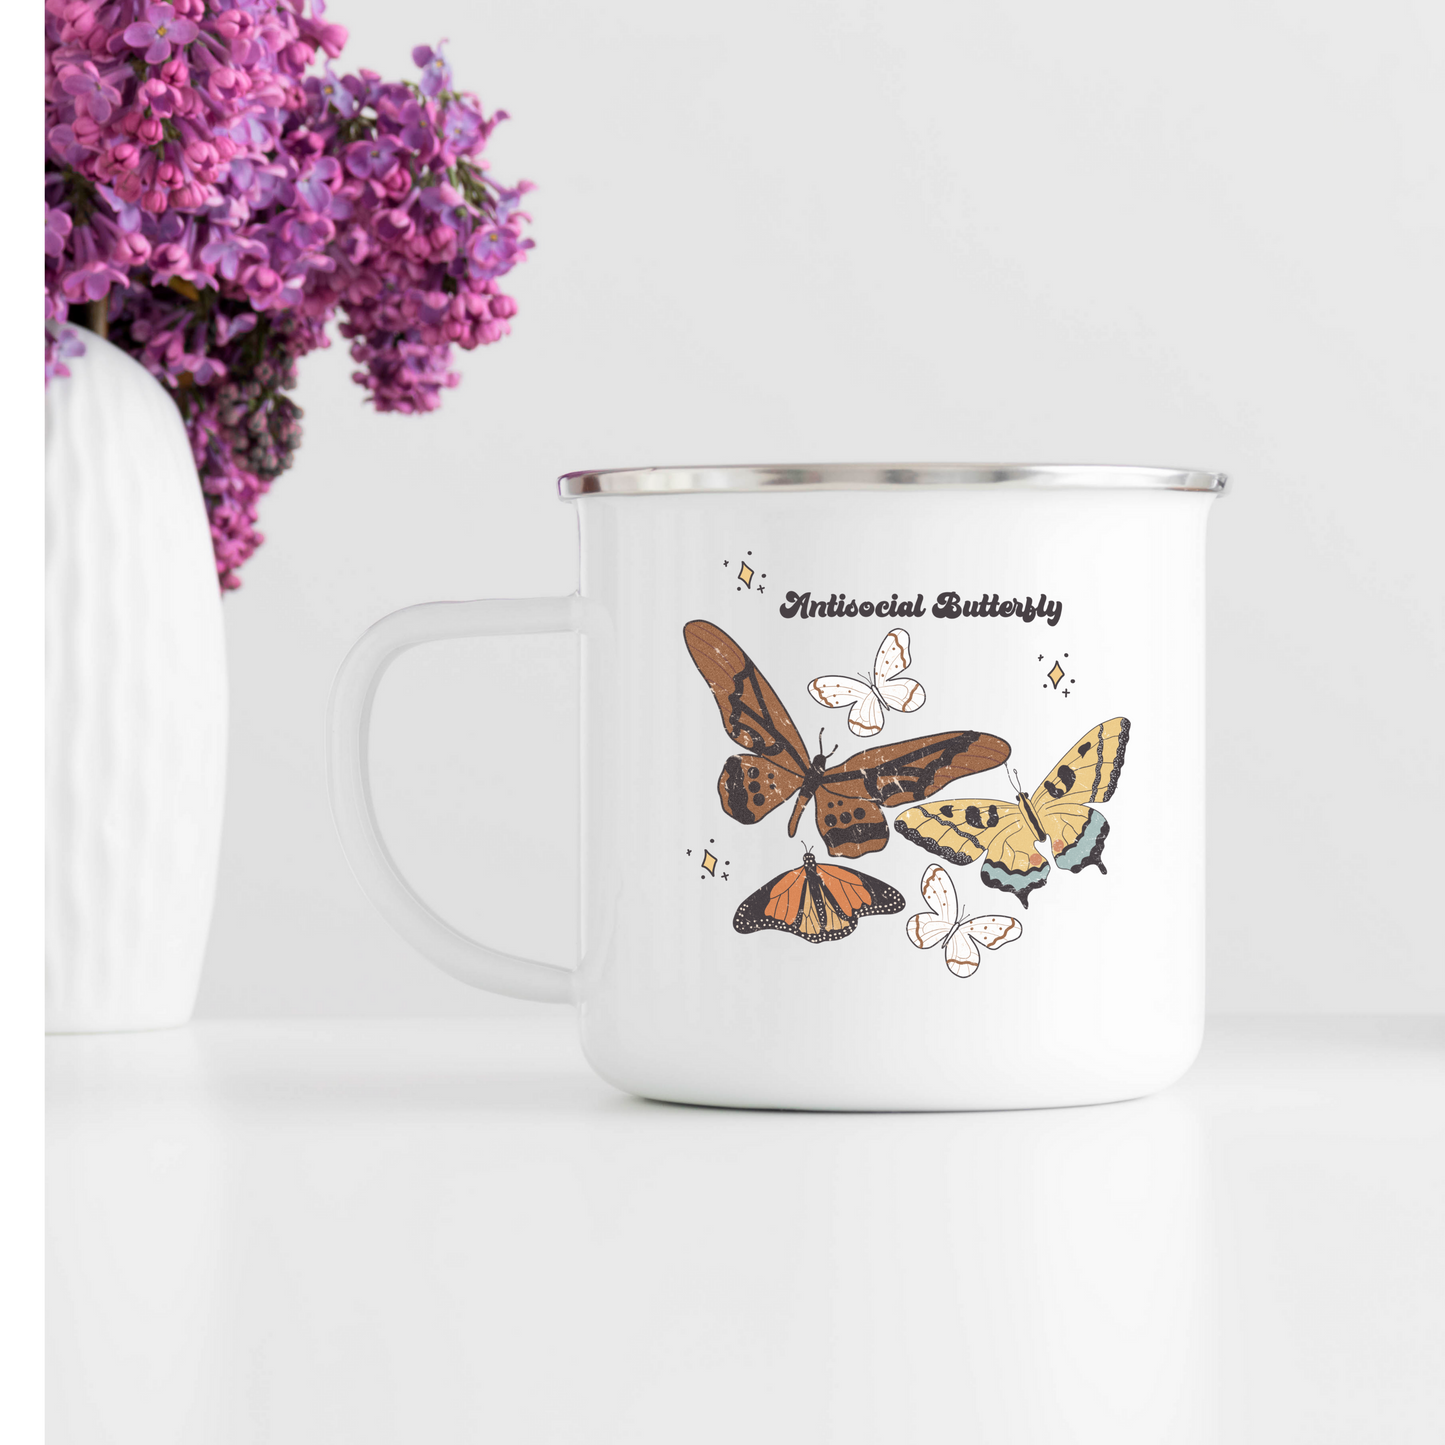 Antisocial Butterfly Campfire Mug